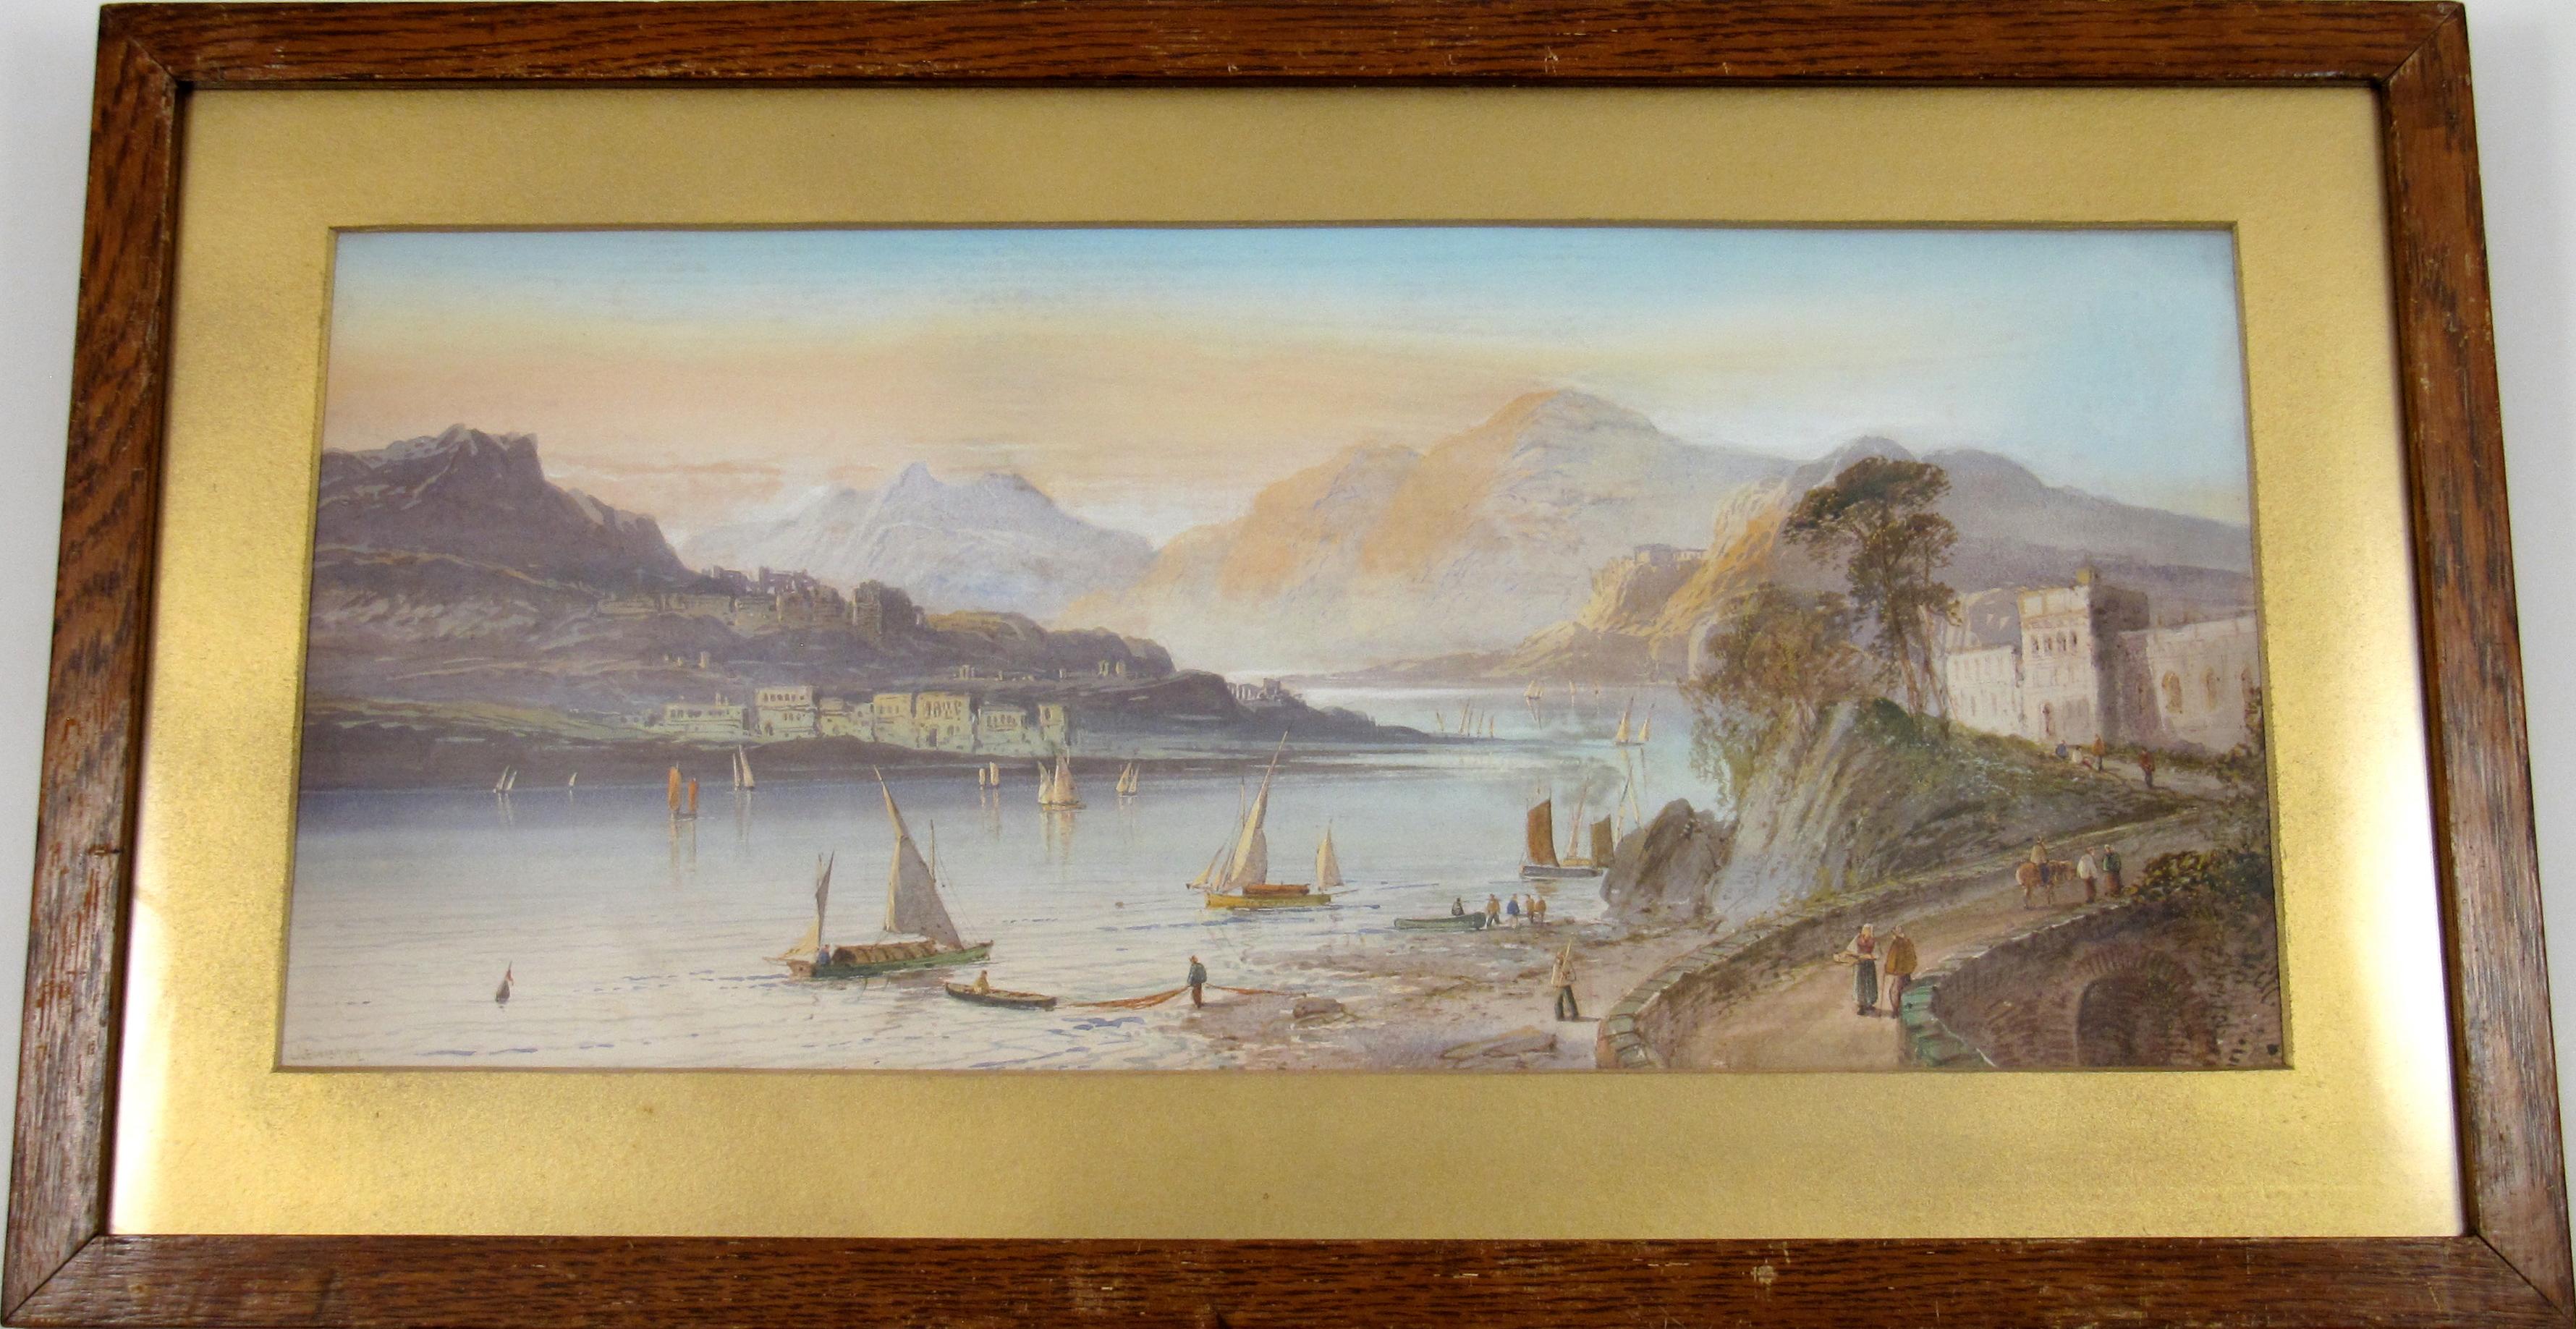 Landscape Art Lennard Lewis - Lewis (anglais, 1826 - 1913) Lago Maggiore Suisse Aquarelle 1898